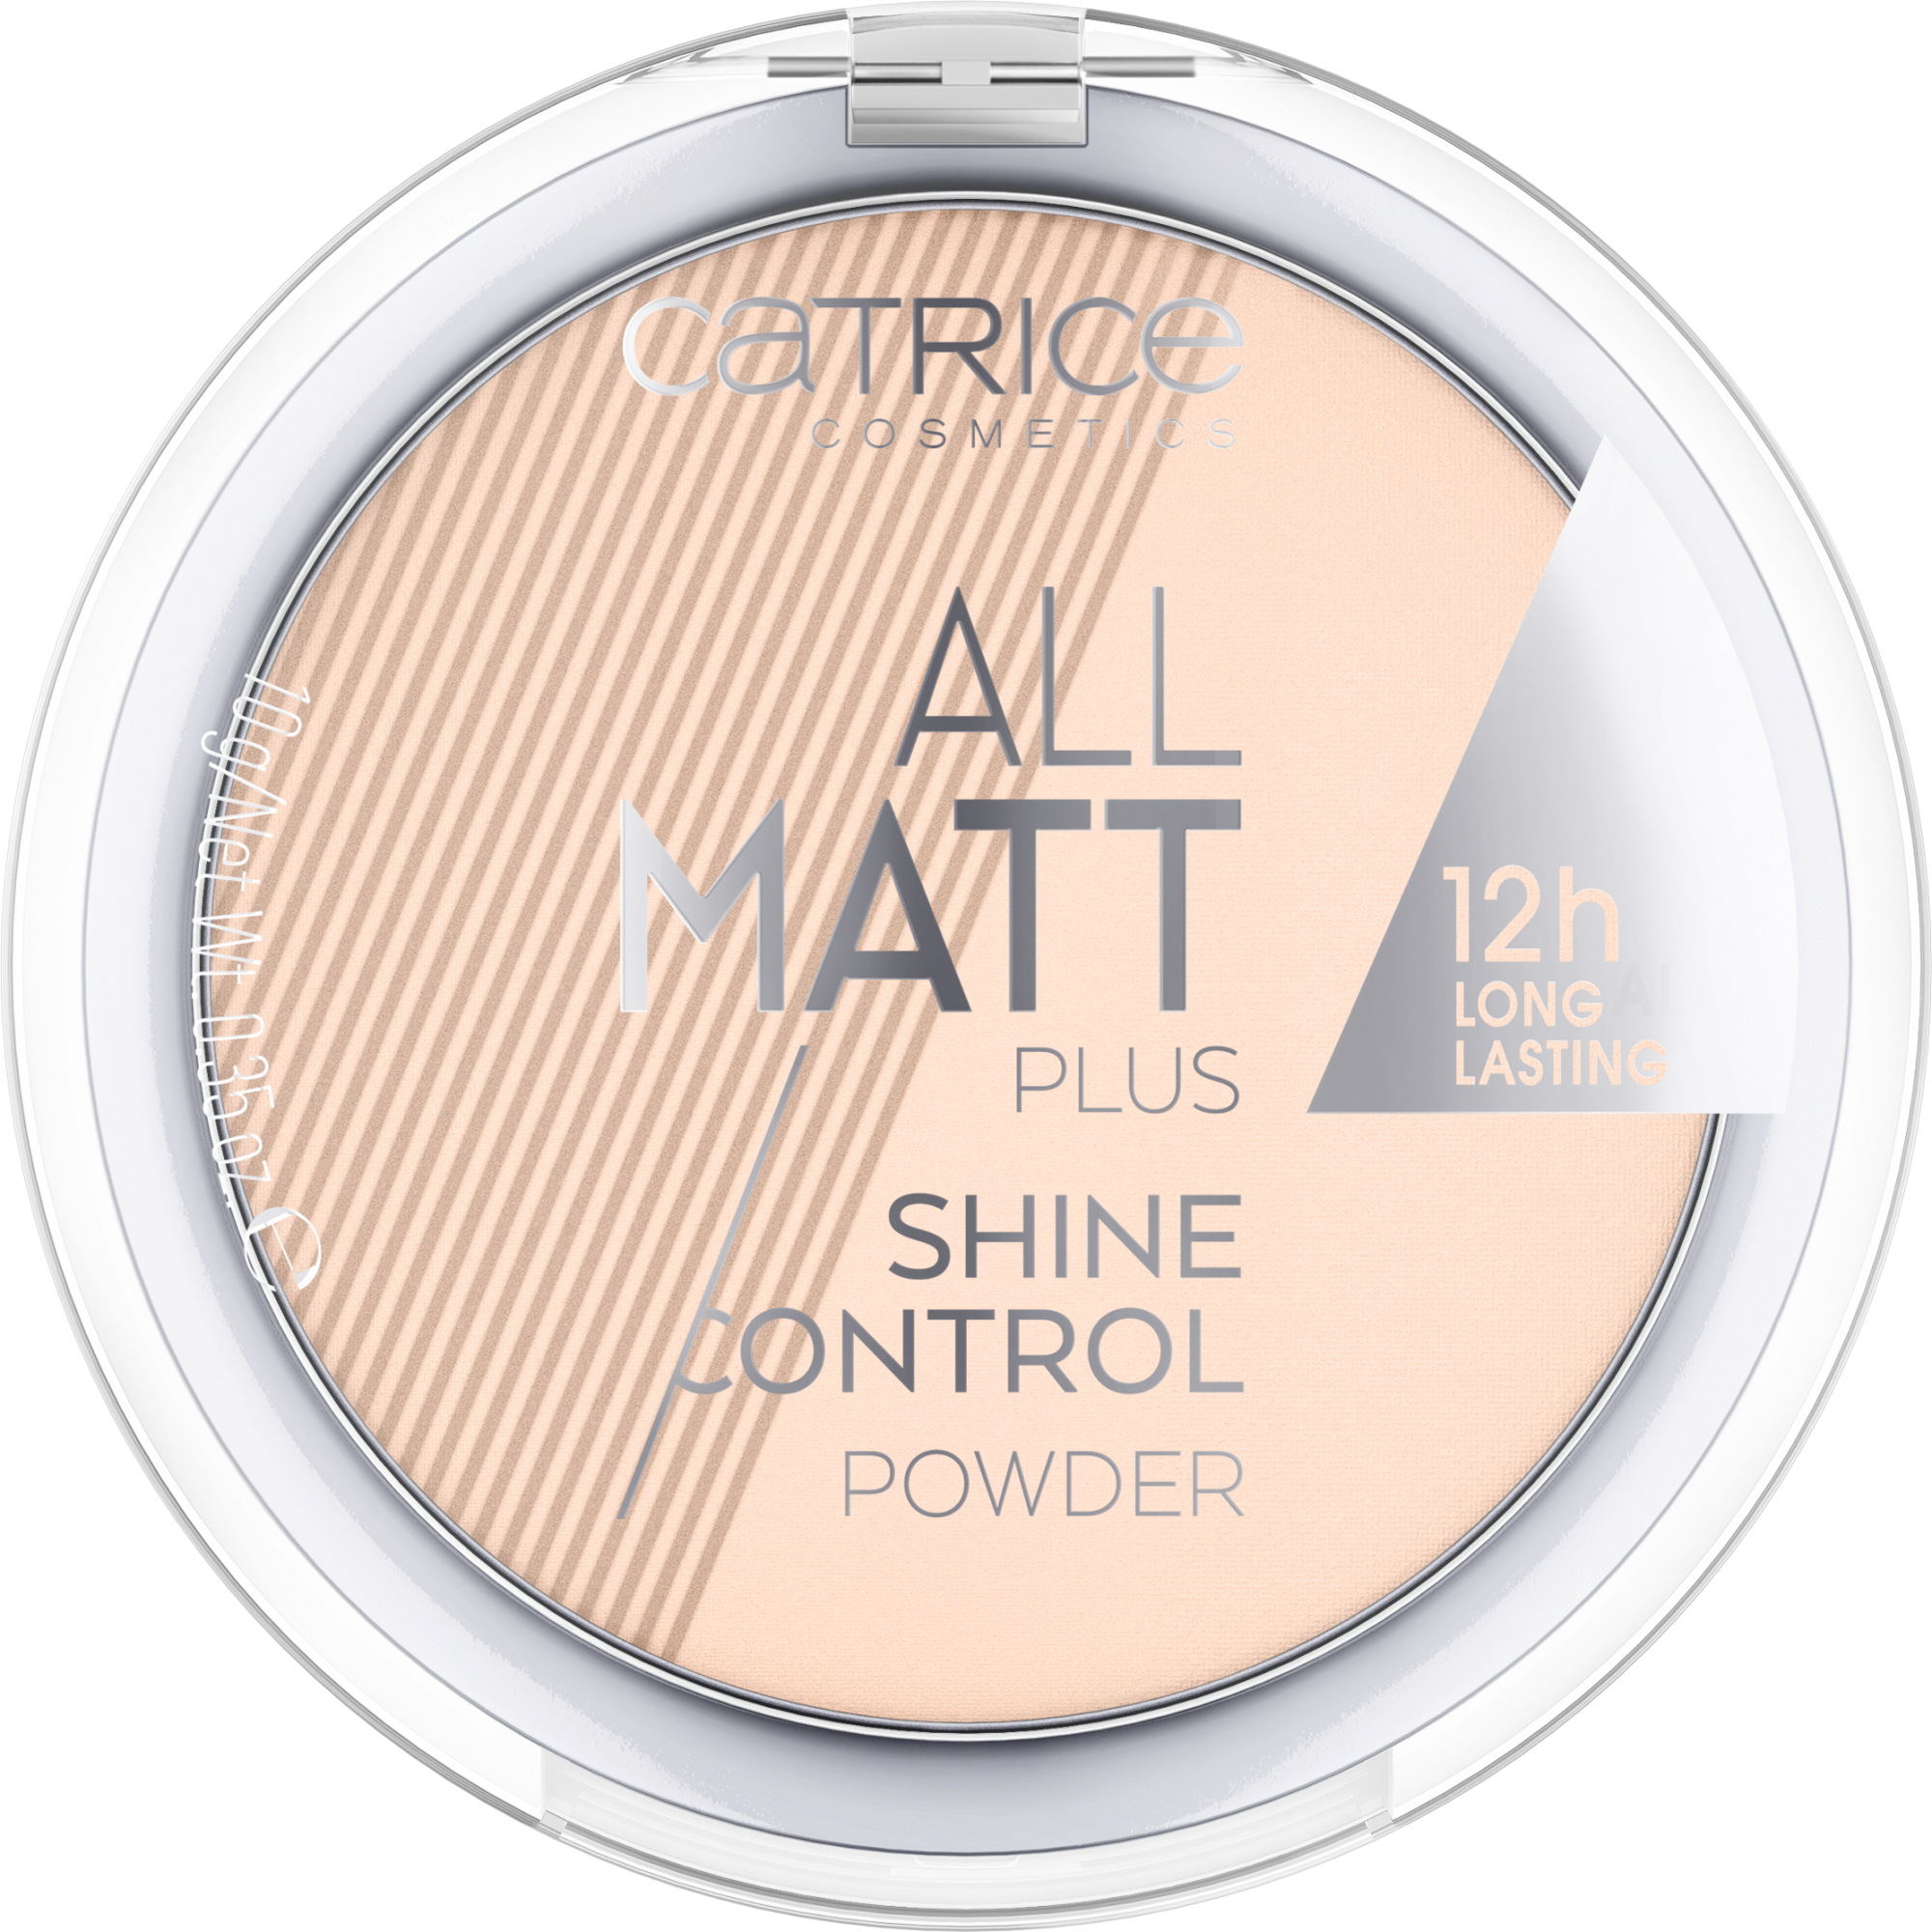 All Matt Plus Shine Control Powder poudre matifiante